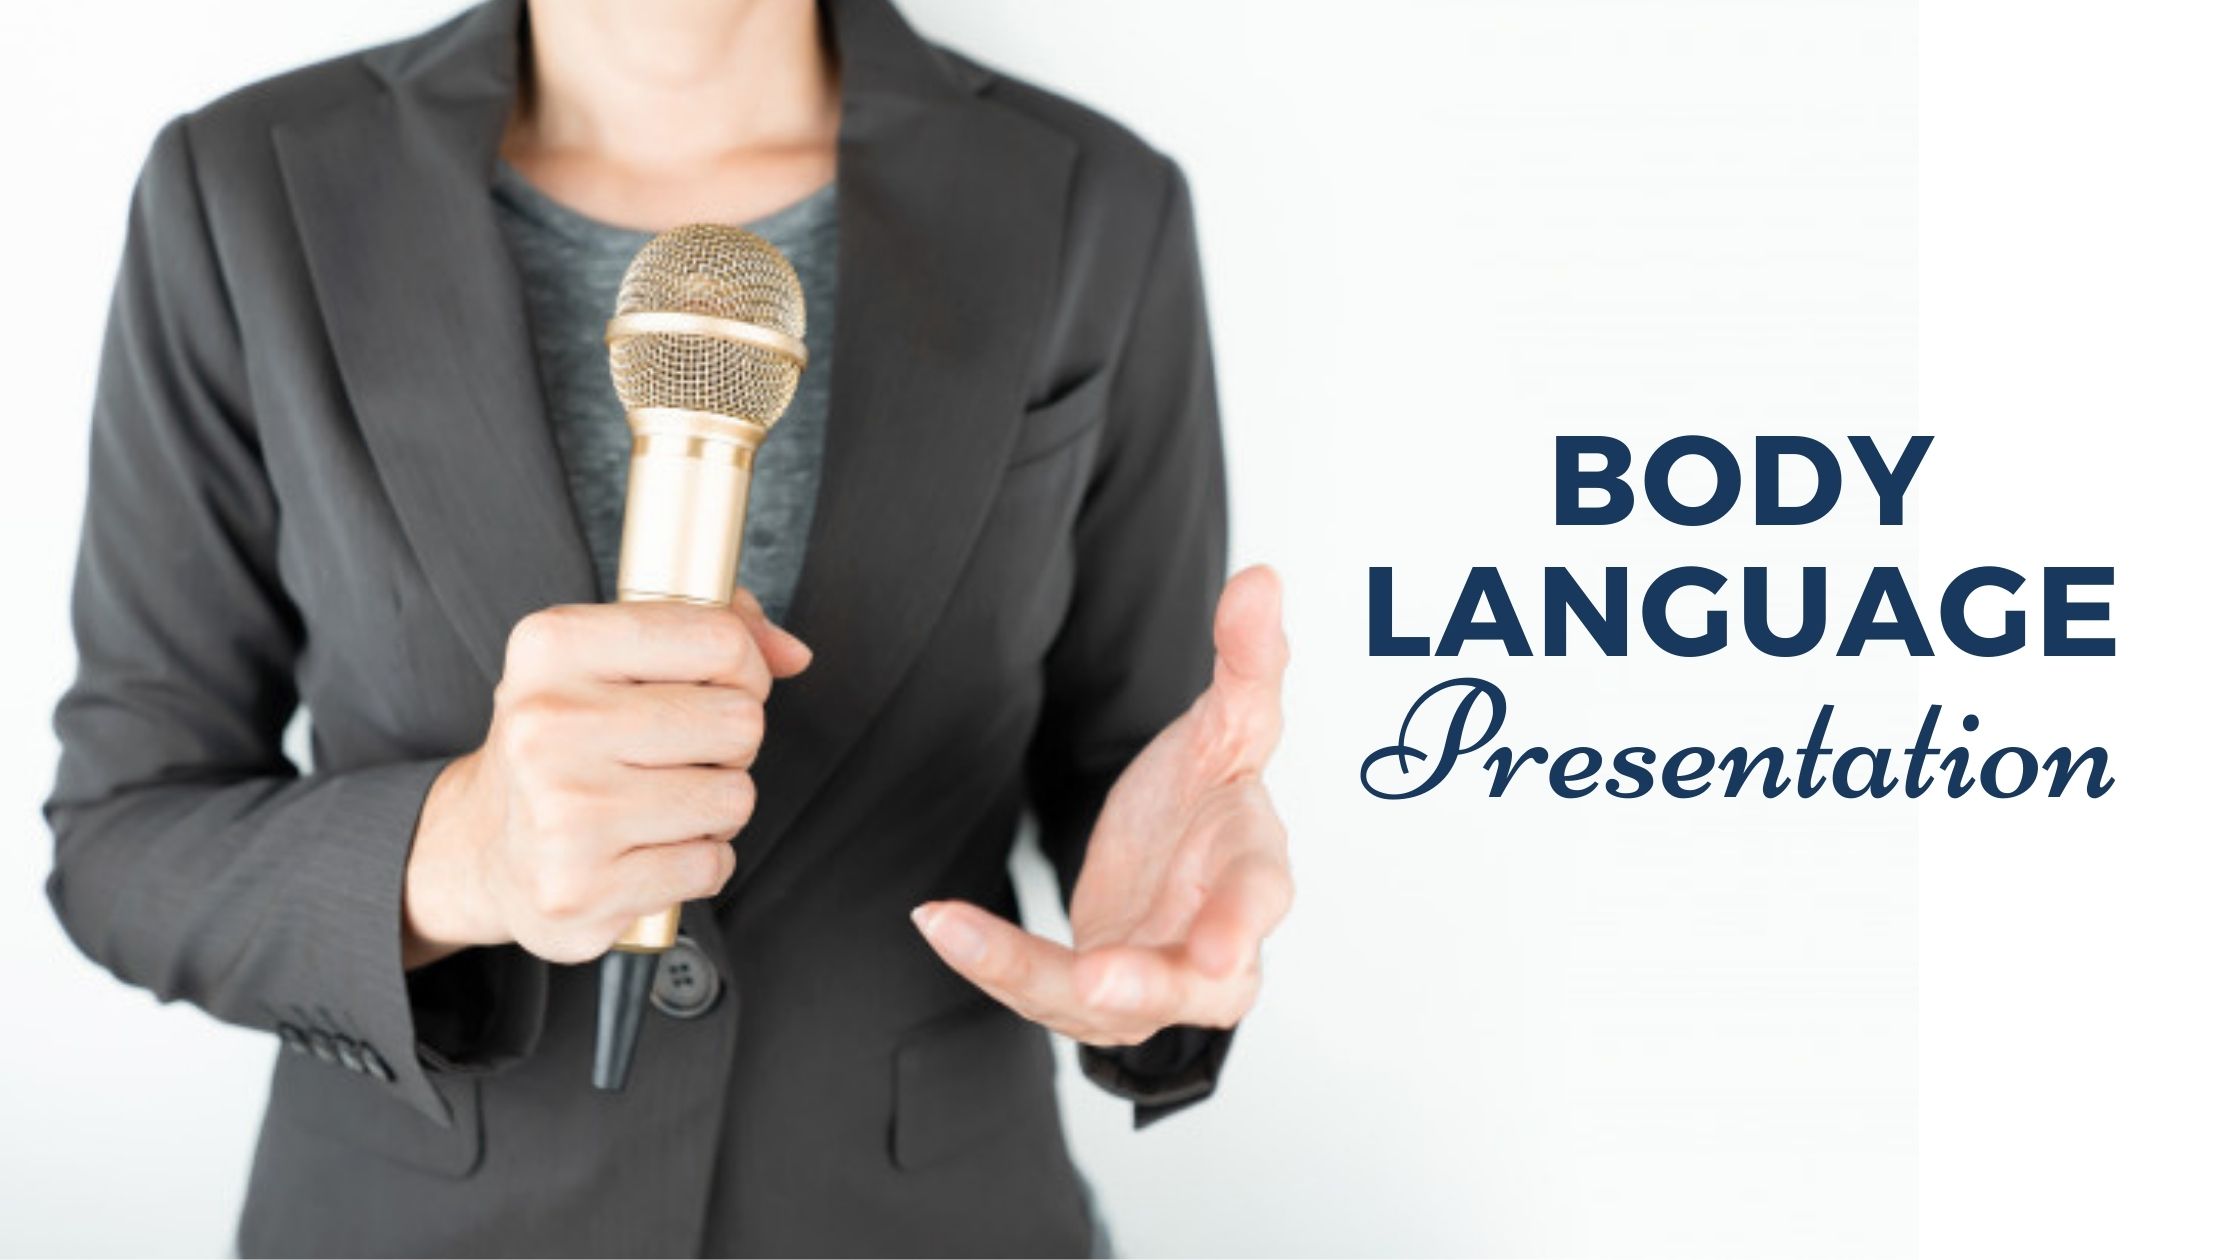 Body language presentation